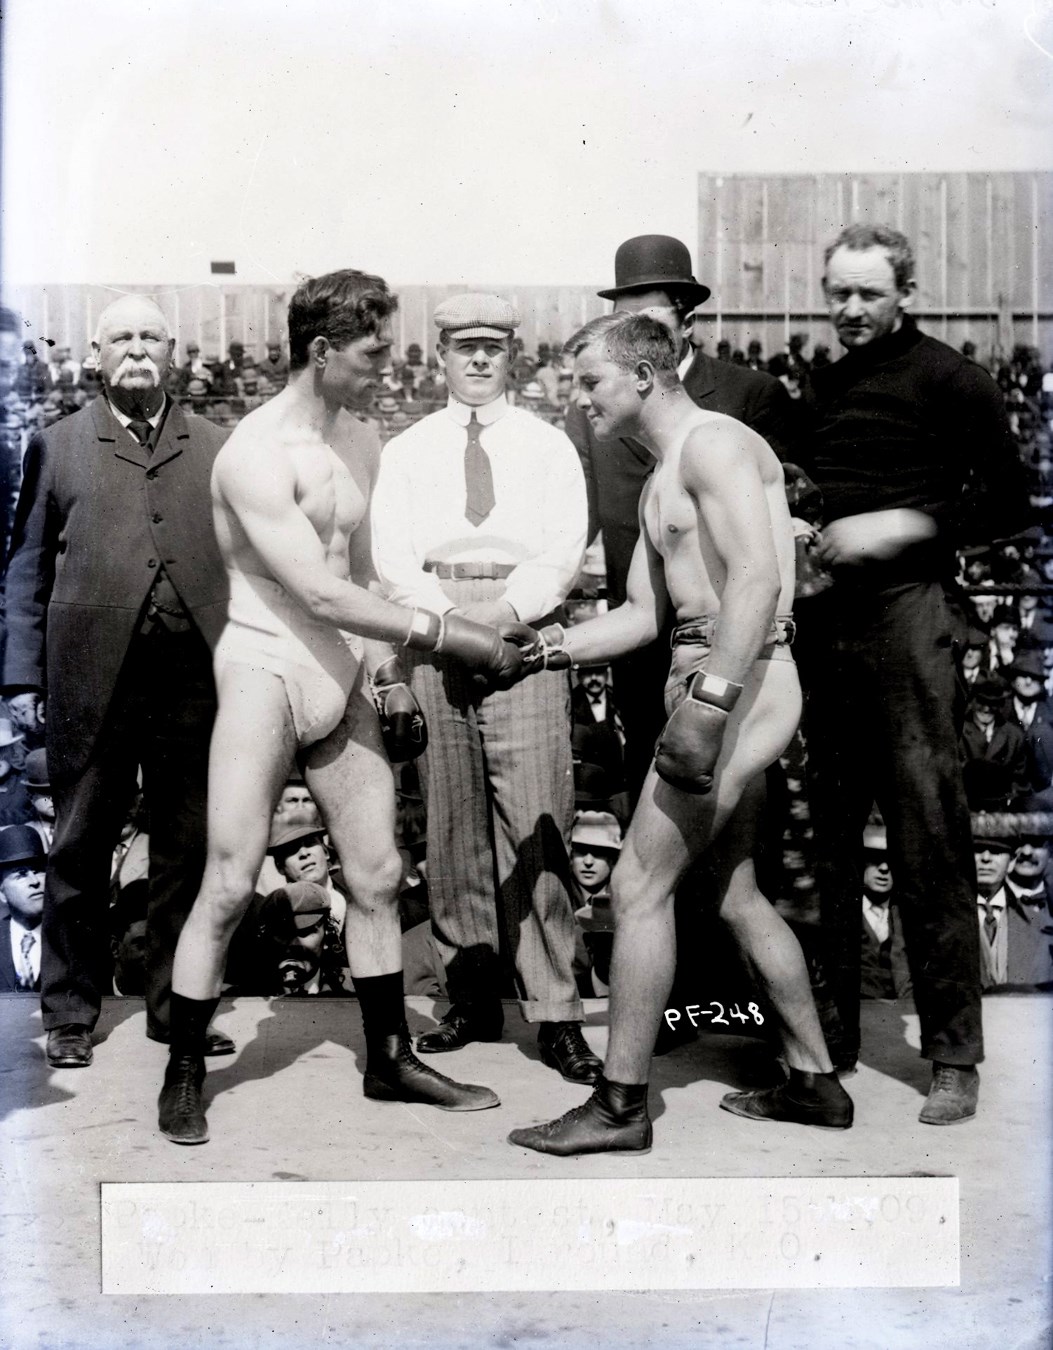 1909 Billy Parke vs. Hugo Kelly "Pre-Fight Handshake" Type I Glass Plate Negative by Dana Studio